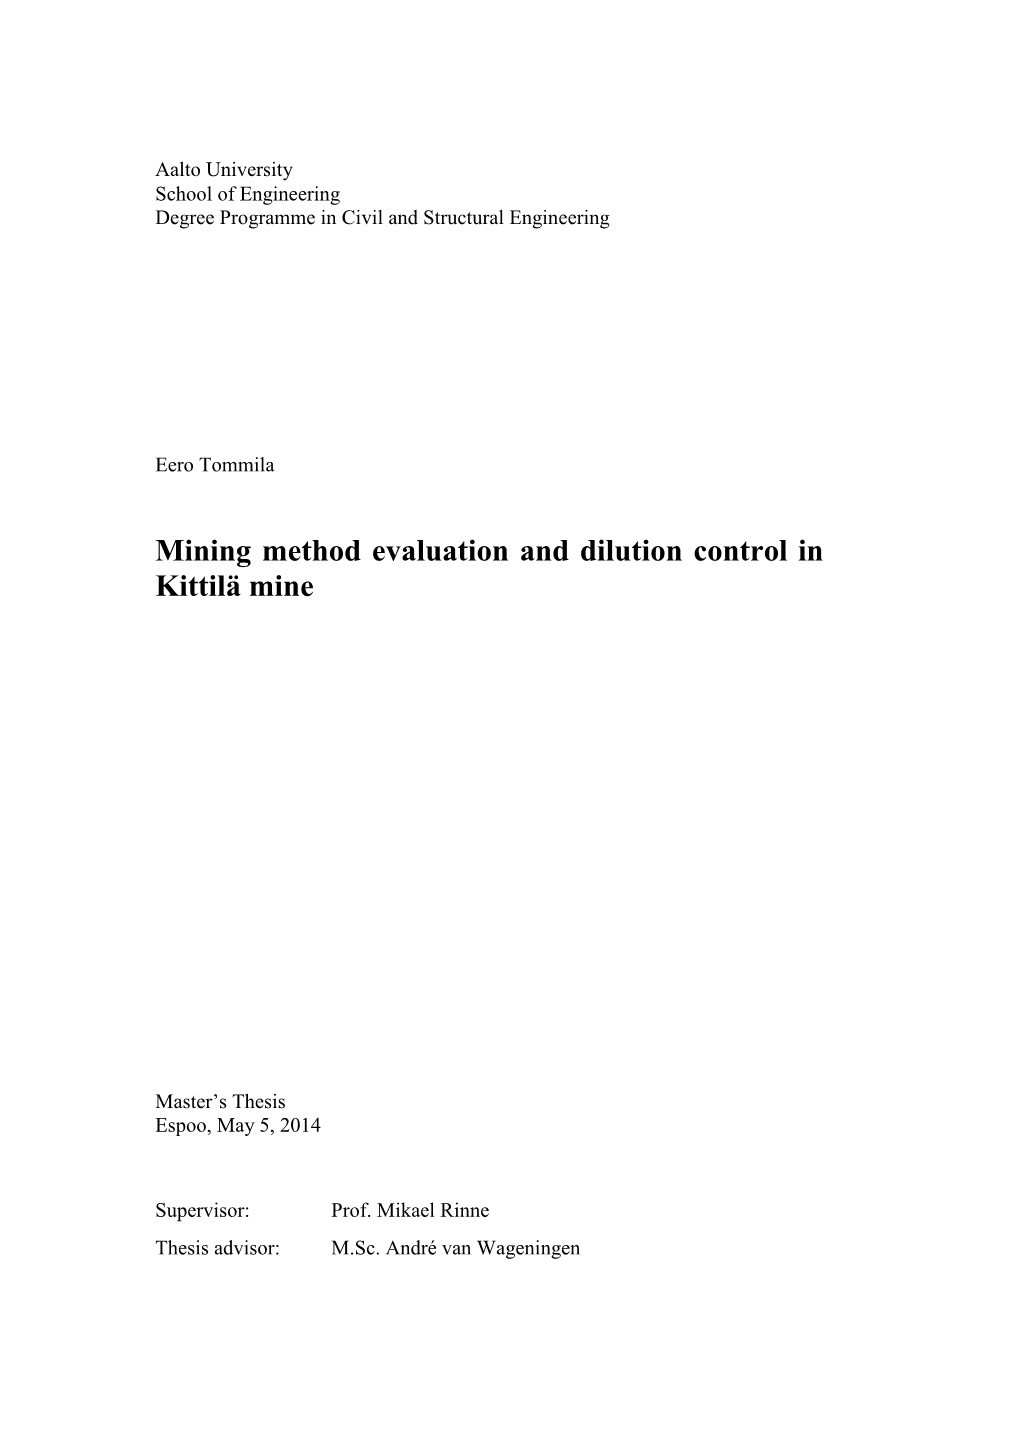 Mining Method Evaluation and Dilution Control in Kittilä Mine